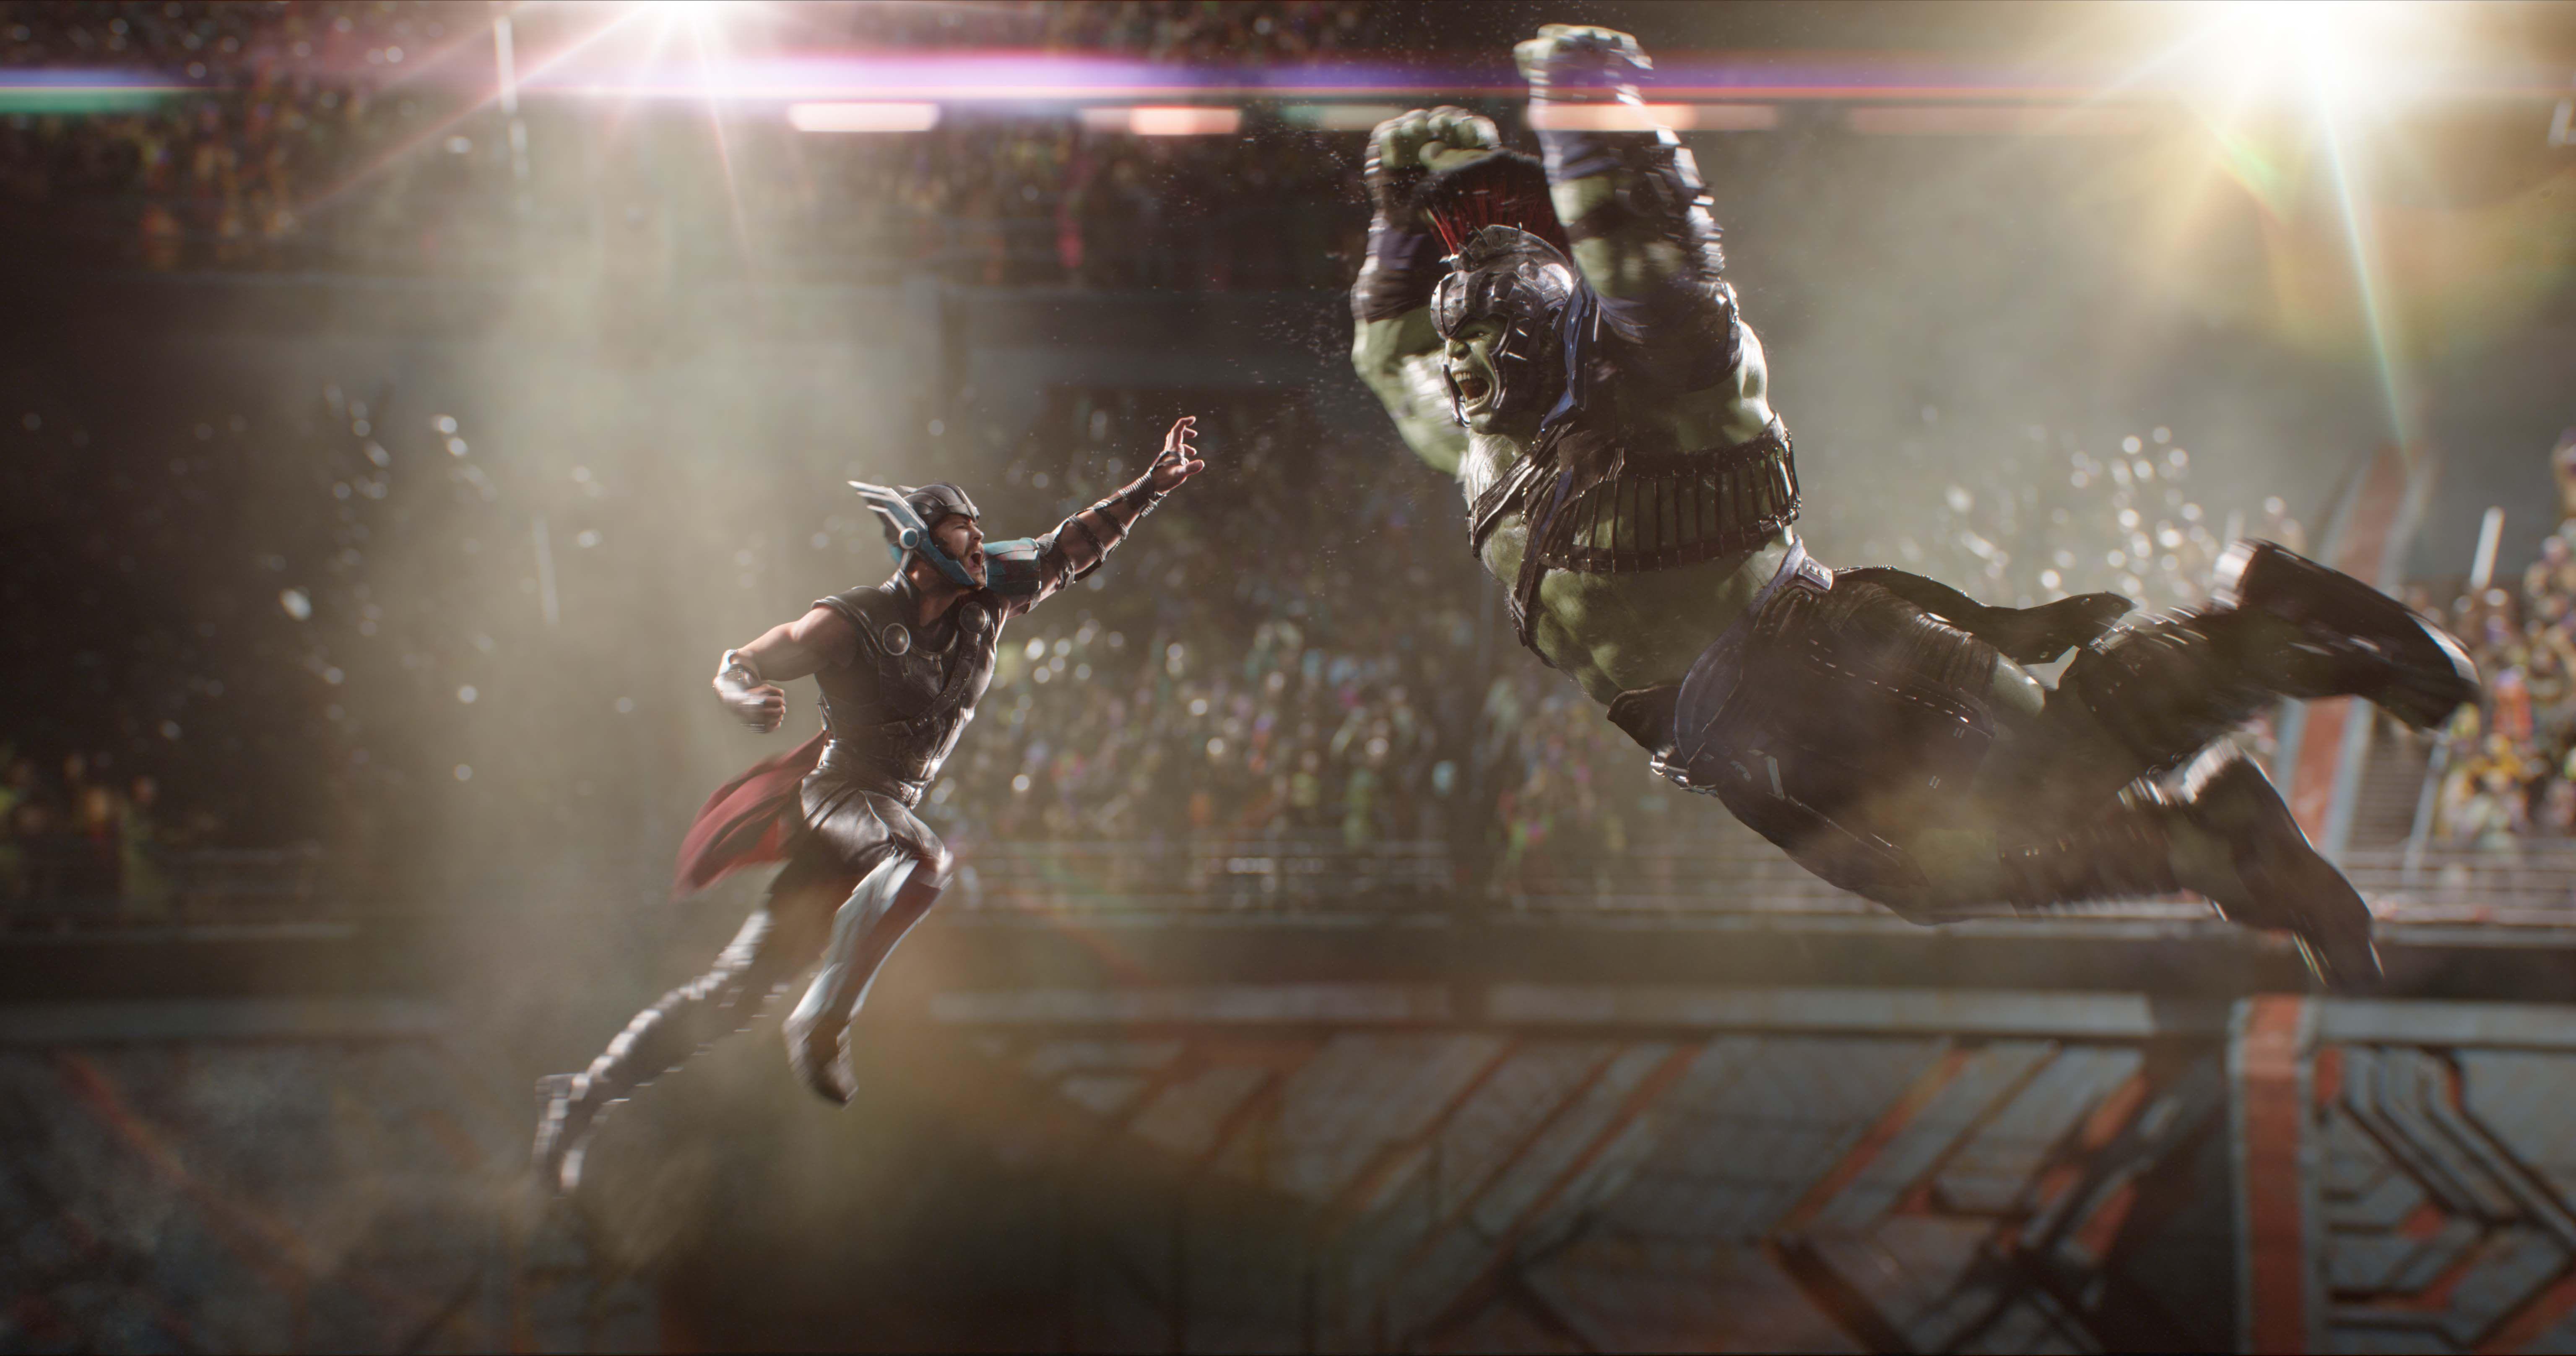 Thor Vs Hulk Wallpapers - Wallpaper Cave